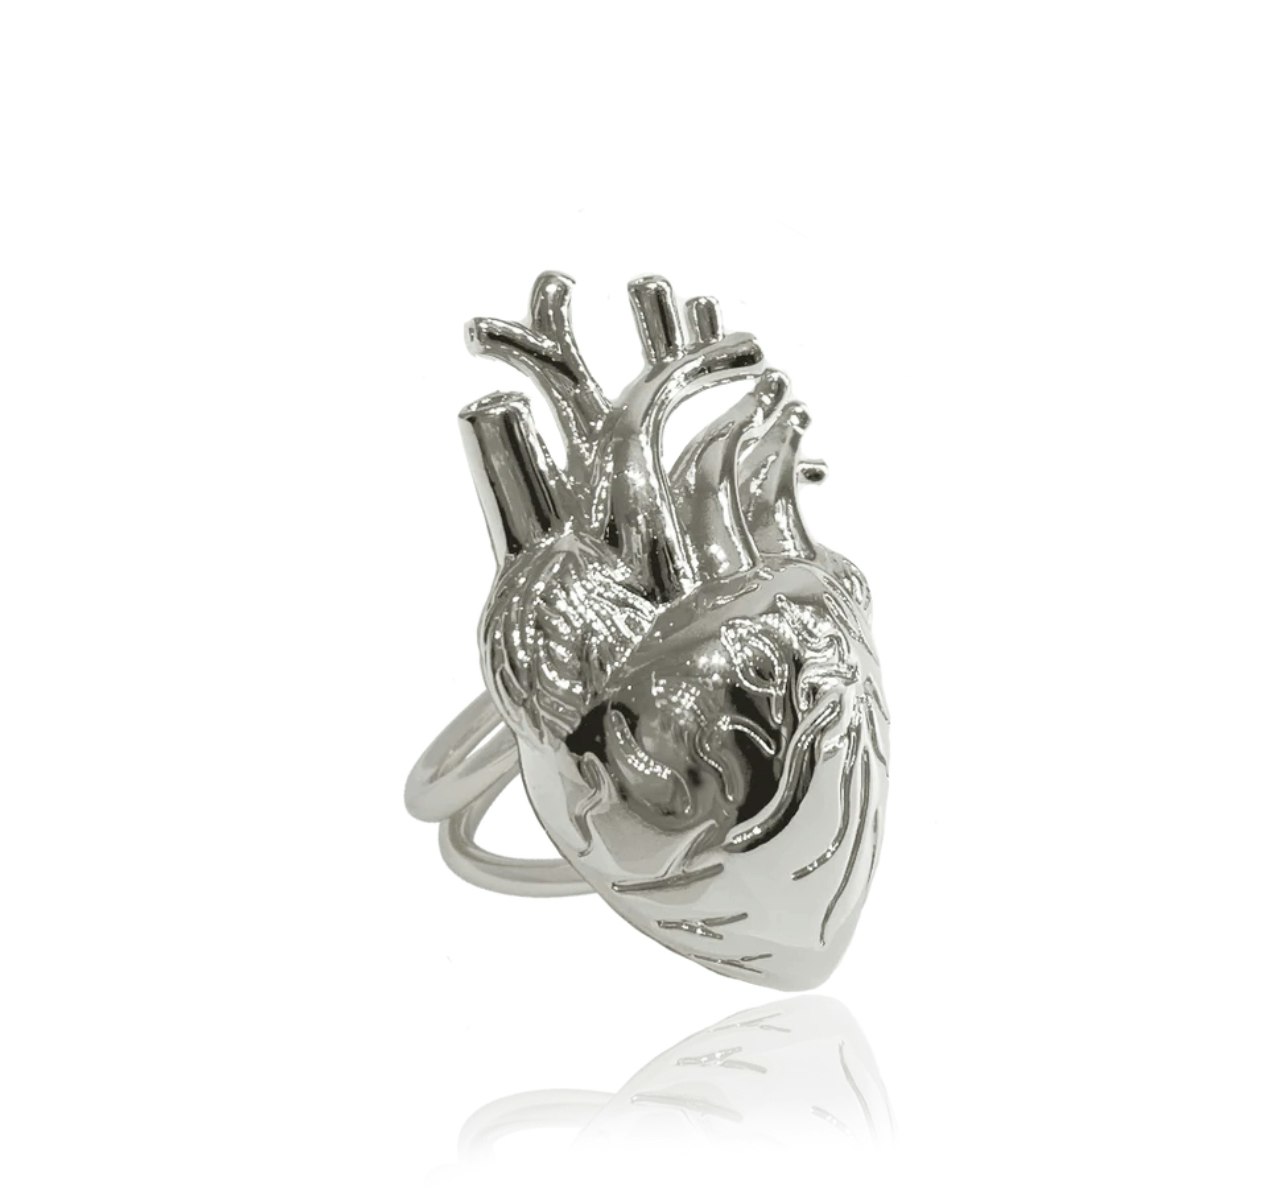 Heart Vascular Ring - Silver